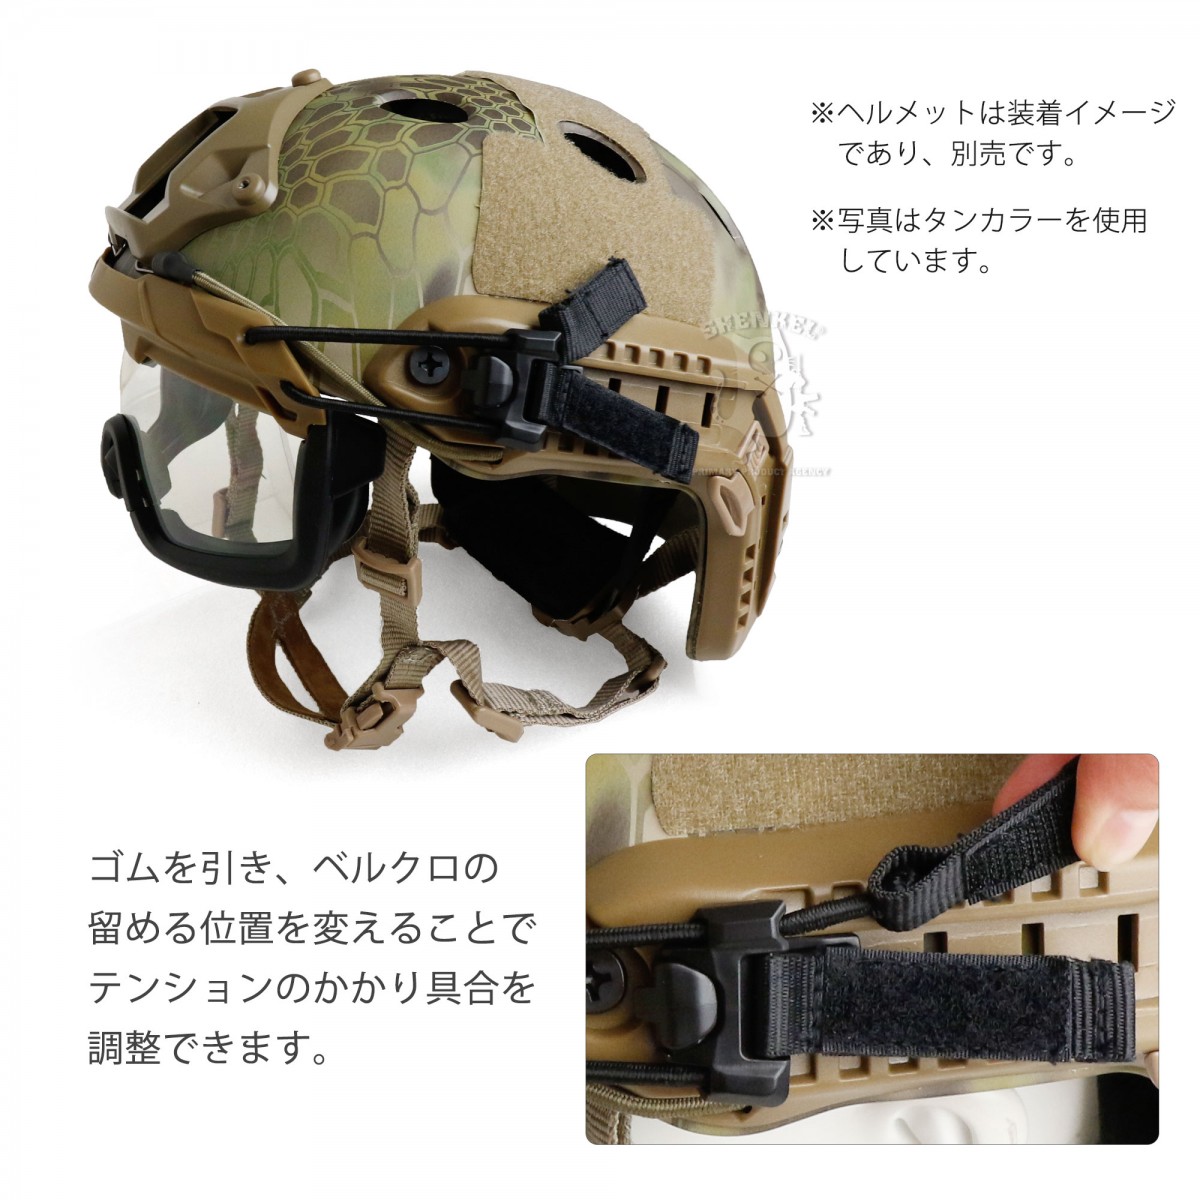 SHENKEL ヘルメットレール 取り付け型 ゴーグル (TAN/GY/BK) ARCレイル対応 サバゲー ペイントボール